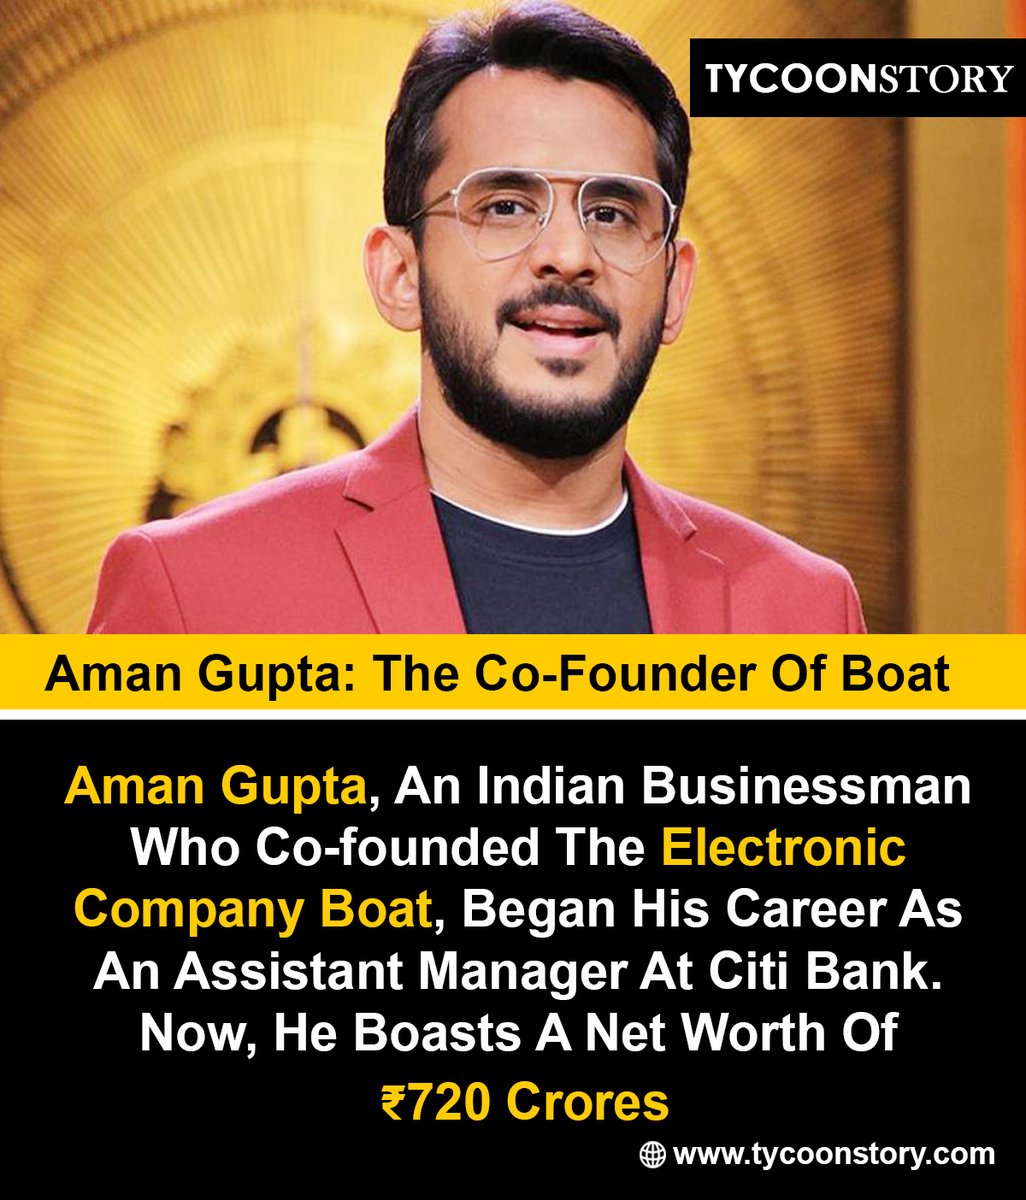 Aman Gupta The Co-Founder Of Boat

#AmanGupta #boAt #TechEntrepreneur #StartupLife #Entrepreneurship #CoFounder #IndianStartup #BusinessOwner #Innovation #TechIndustry #SuccessStory #Inspiration #AudioEquipment  @RockWithboAt  @amangupta0303 

tycoonstory.com